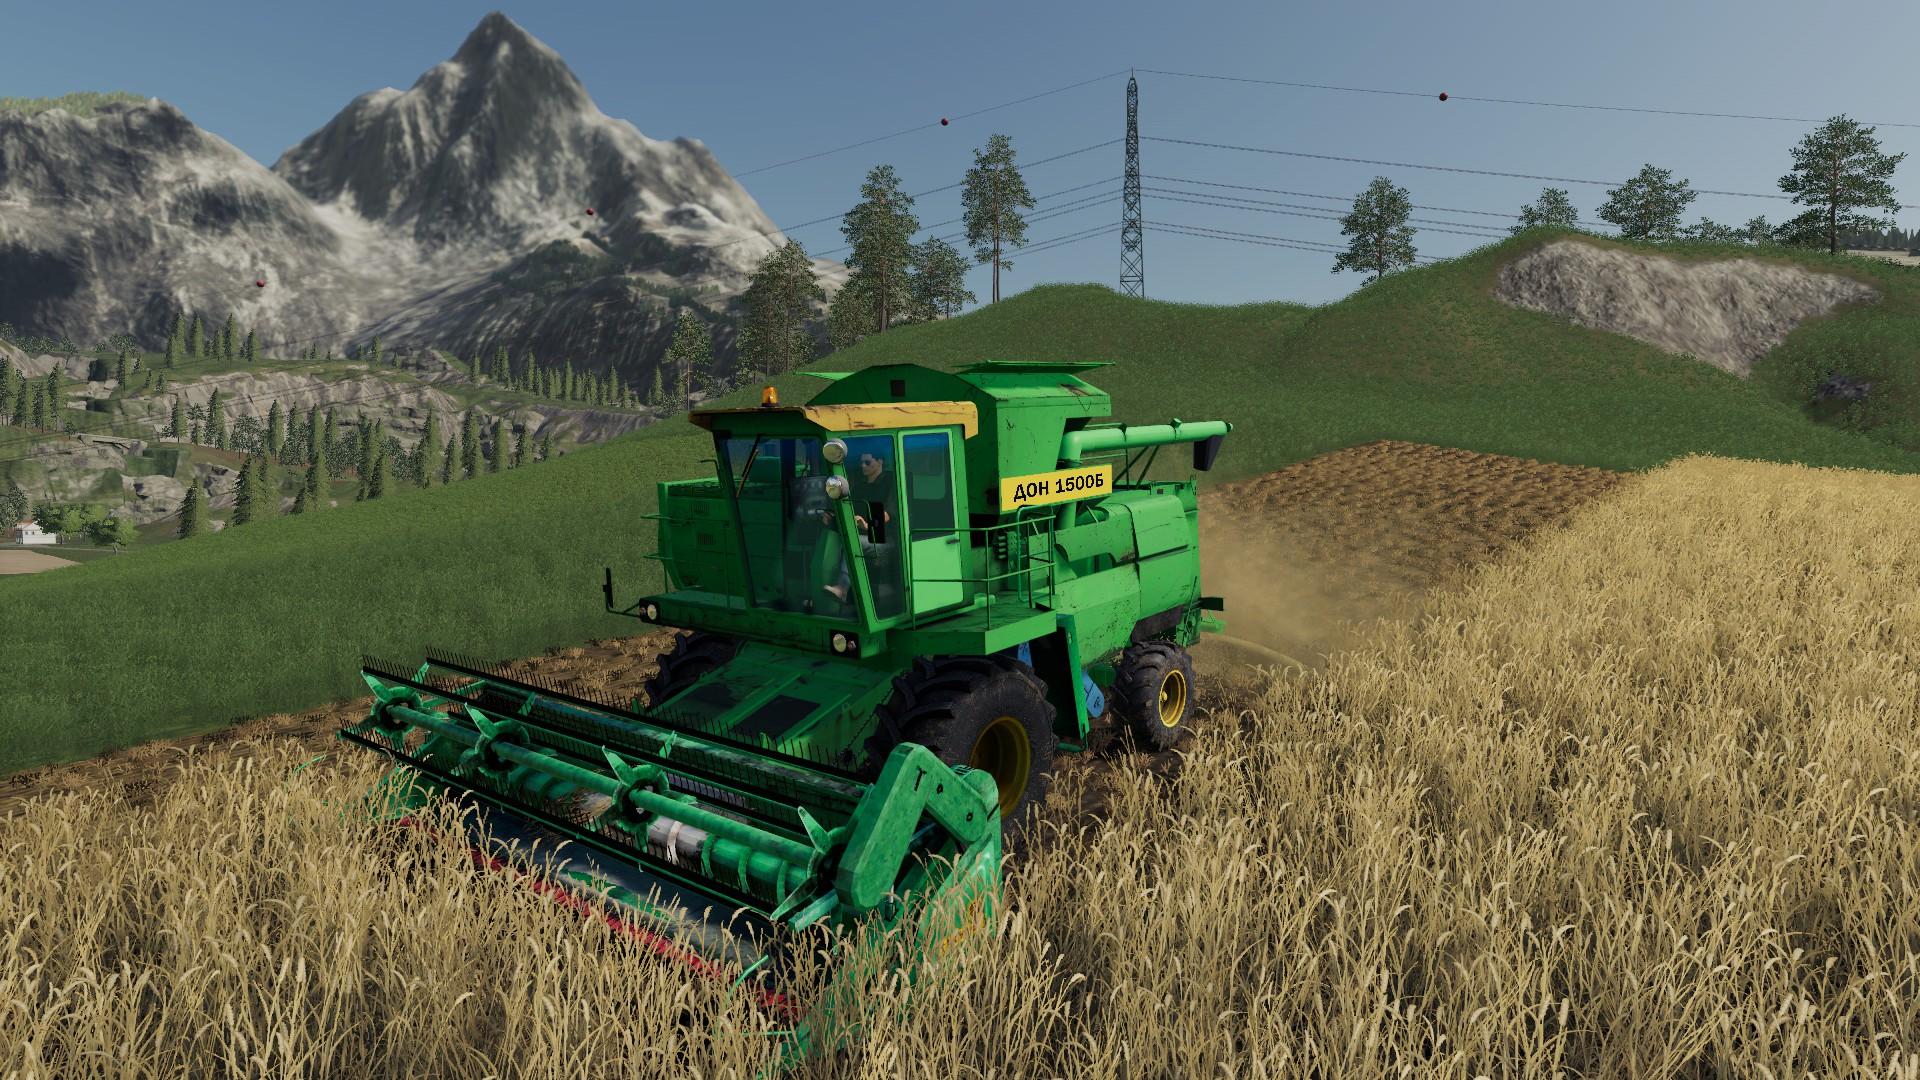 Игра farming simulator 22 моды. FS 19 Дон 1500. Farming Simulator 19. Дон 1500б для ФС 19. Дон-1500б fs22.